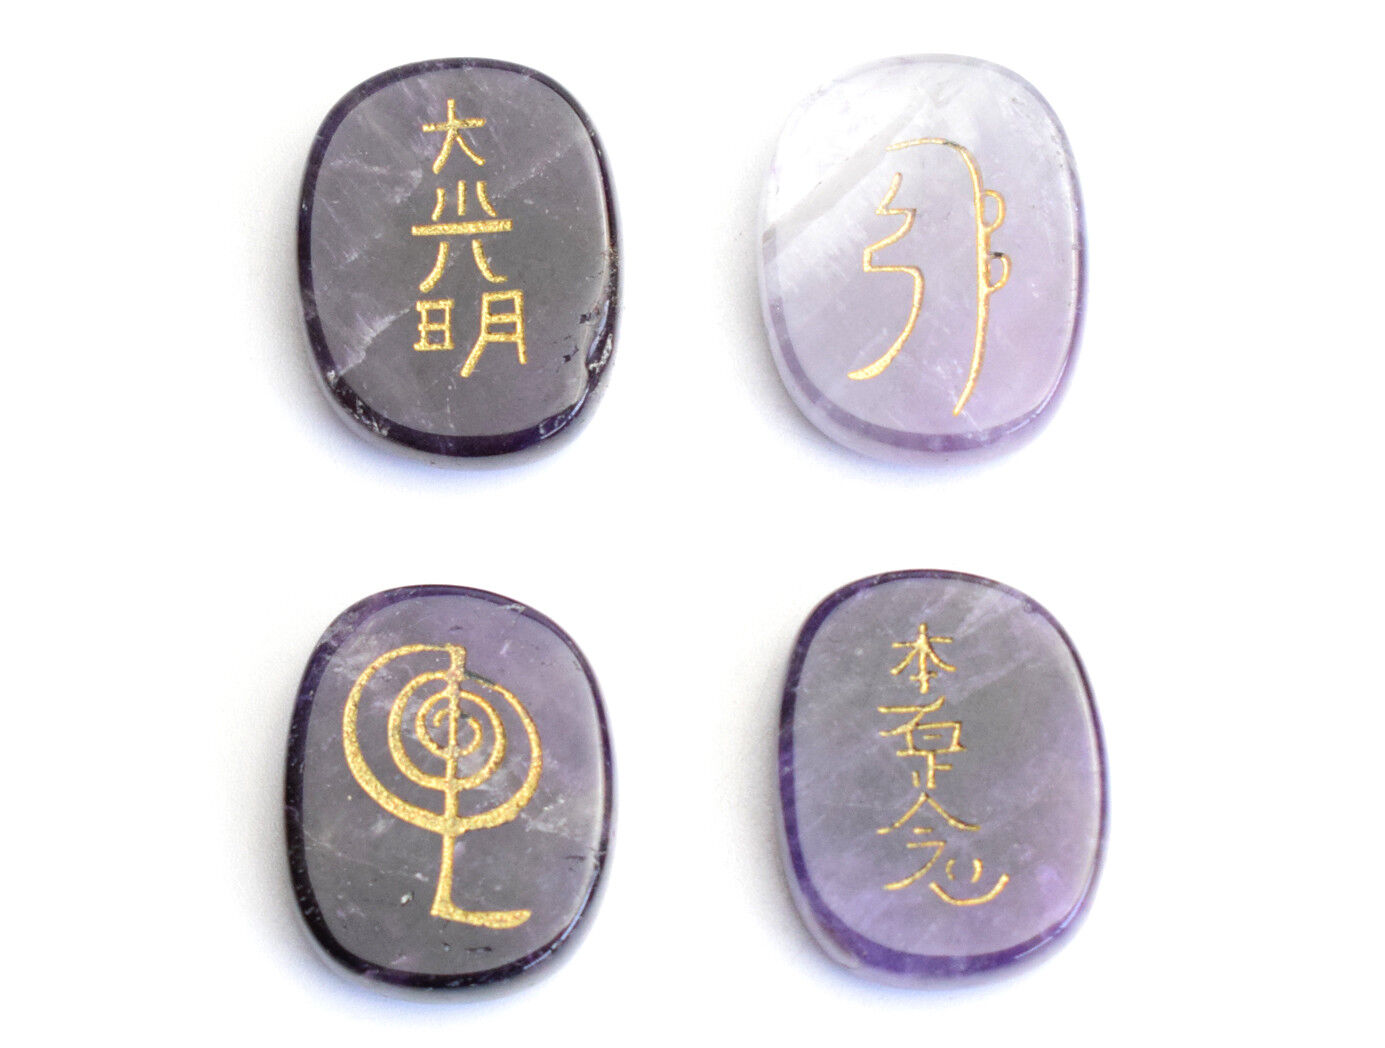 1 INCH Natural Amethyst Engraved Healing Balance Usui Reiki Symbols Palm Stones